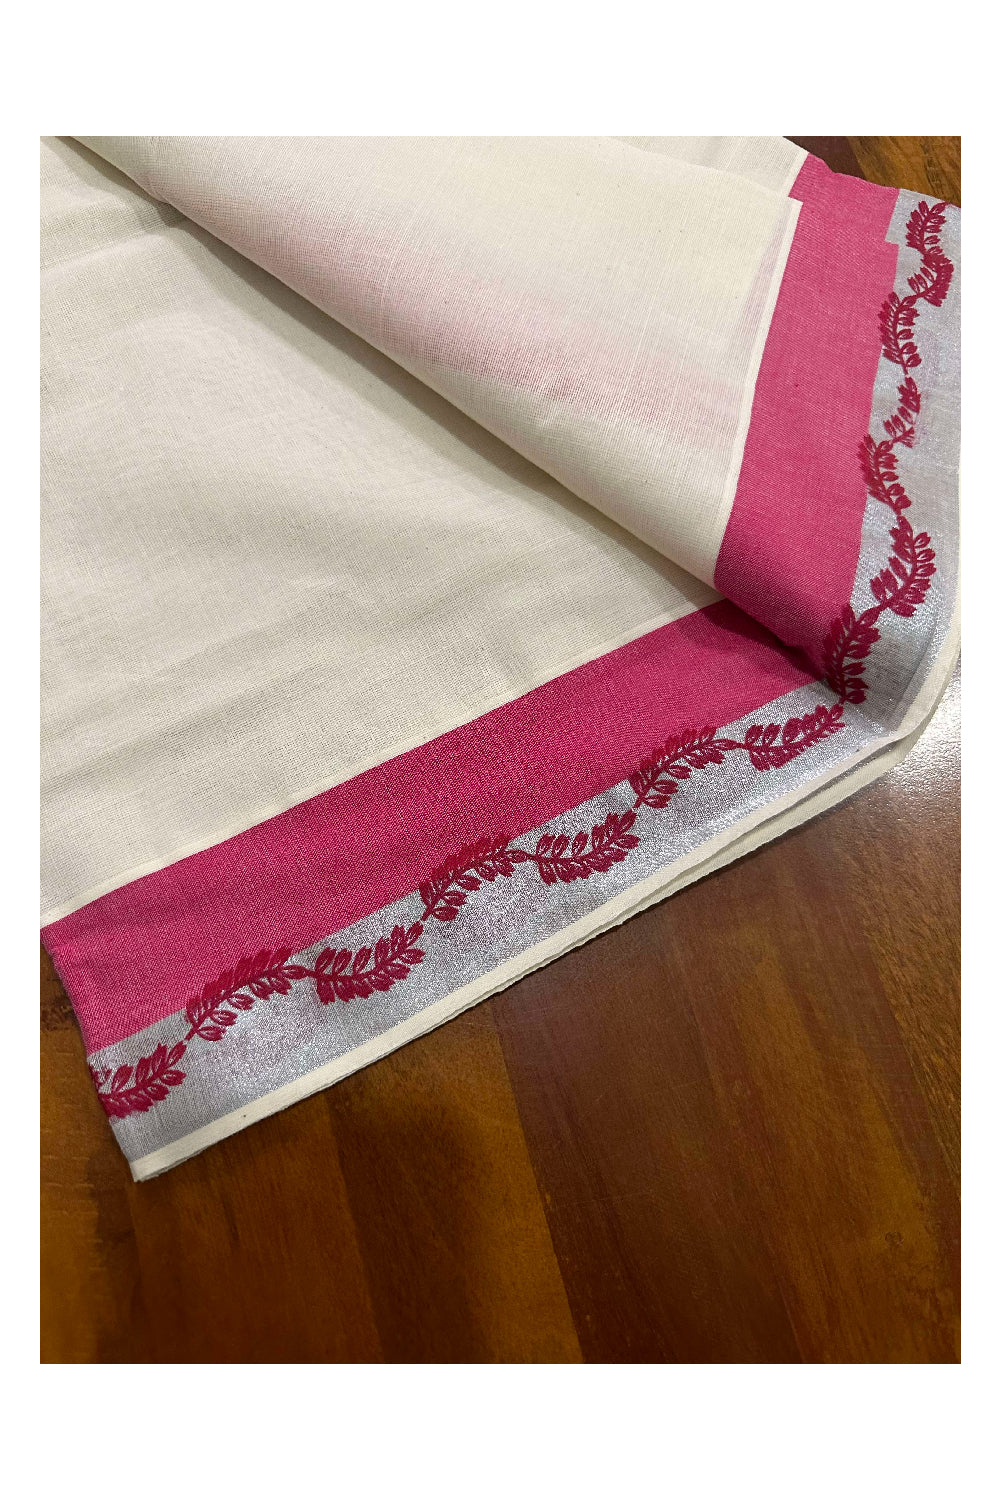 Kerala Cotton Single Set Mundu (Mundum Neriyathum) with Bright Magenta Block Prints and Silver Kasavu Border 2.80 Mtrs